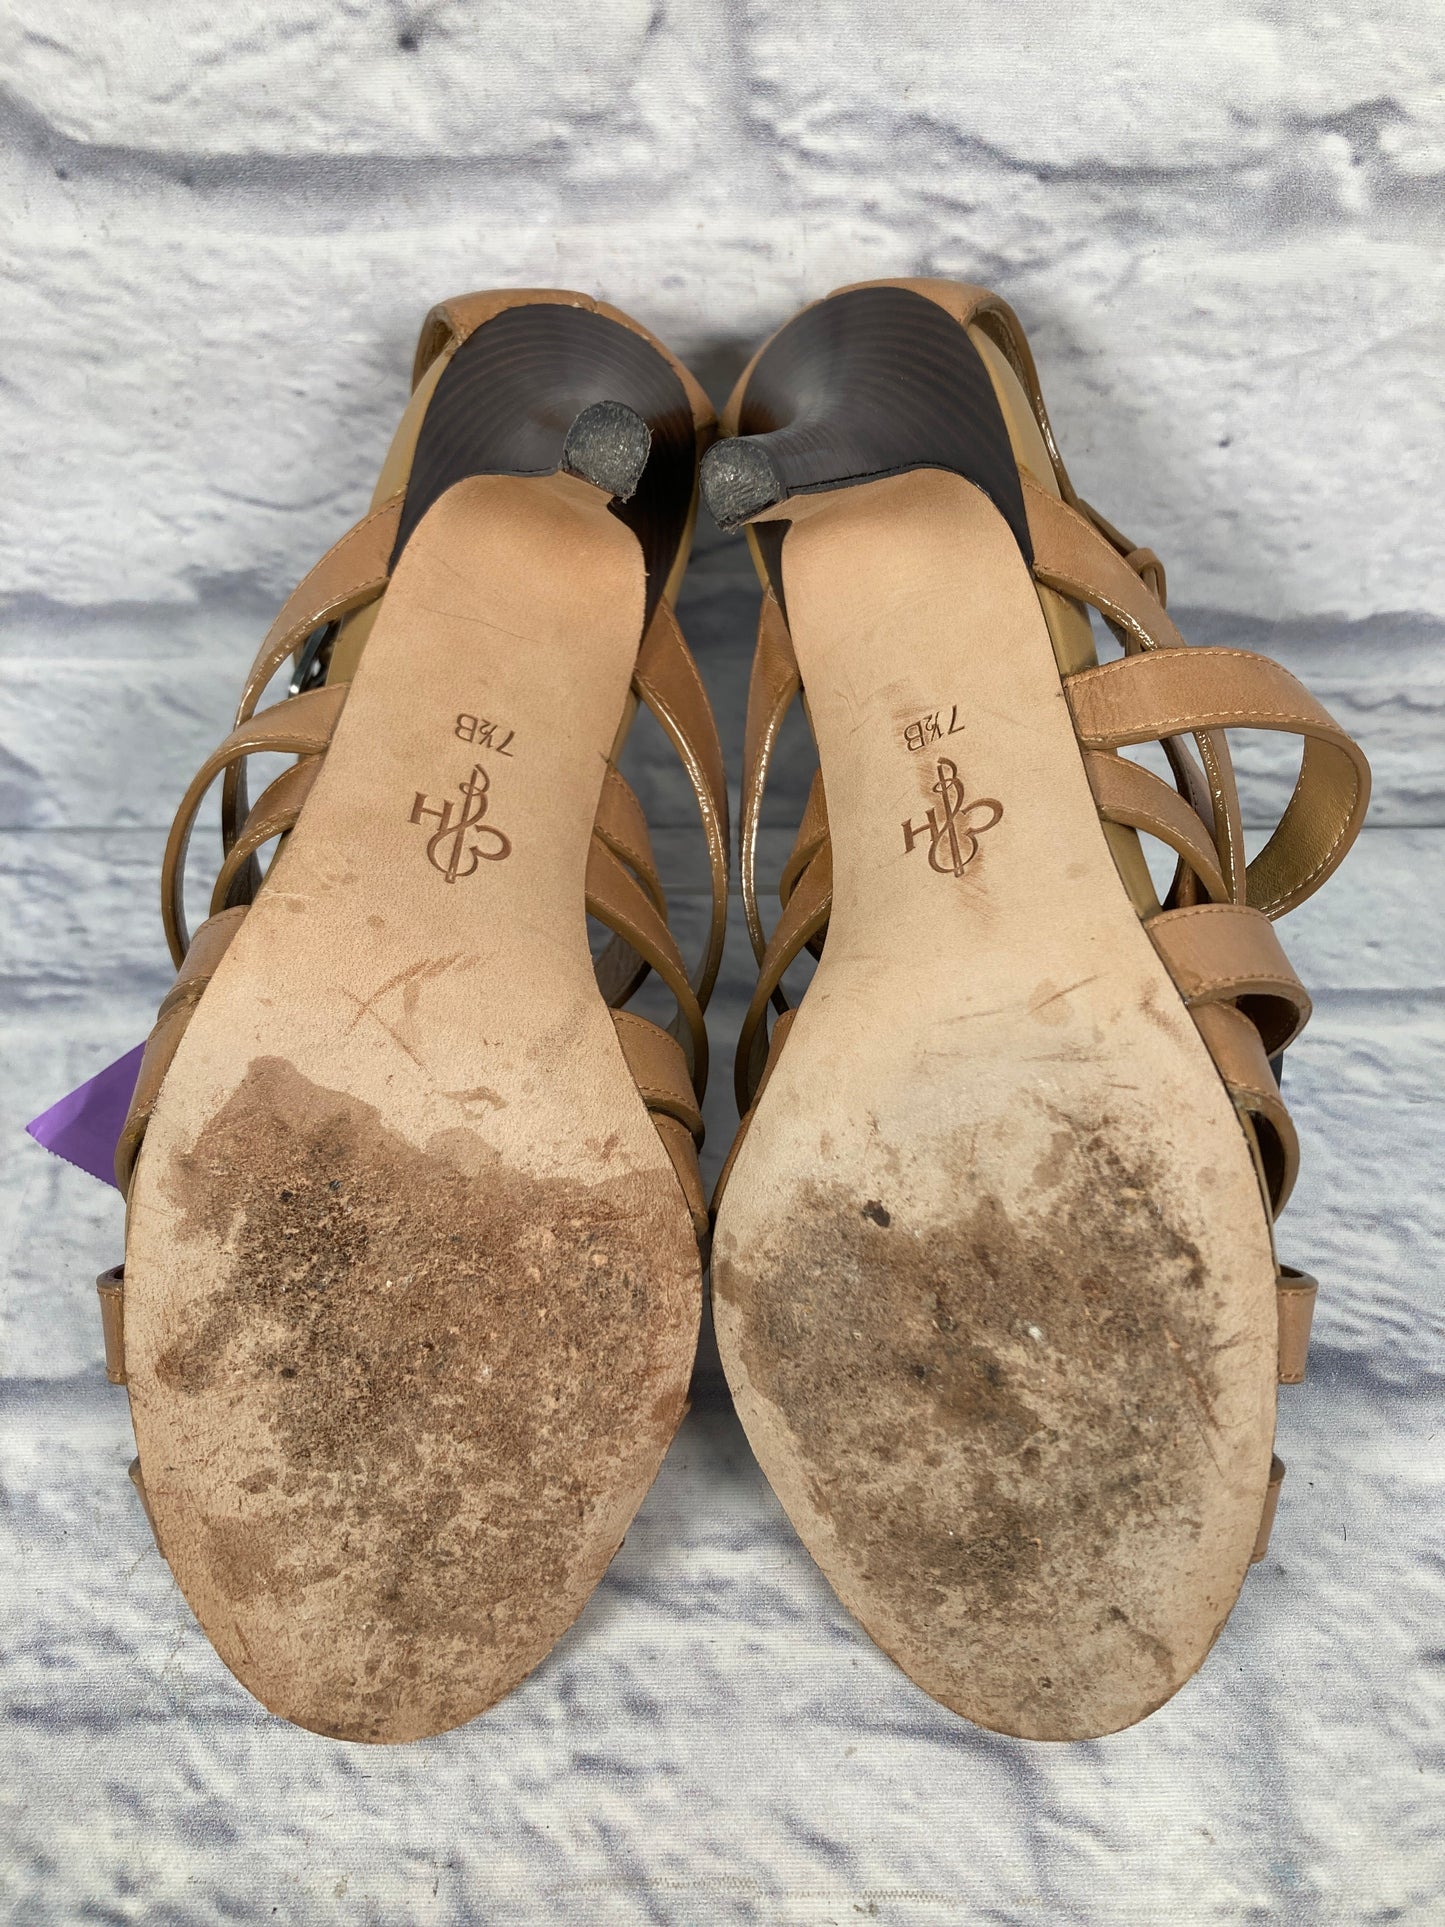 Tan Sandals Heels Stiletto Cole-haan, Size 7.5